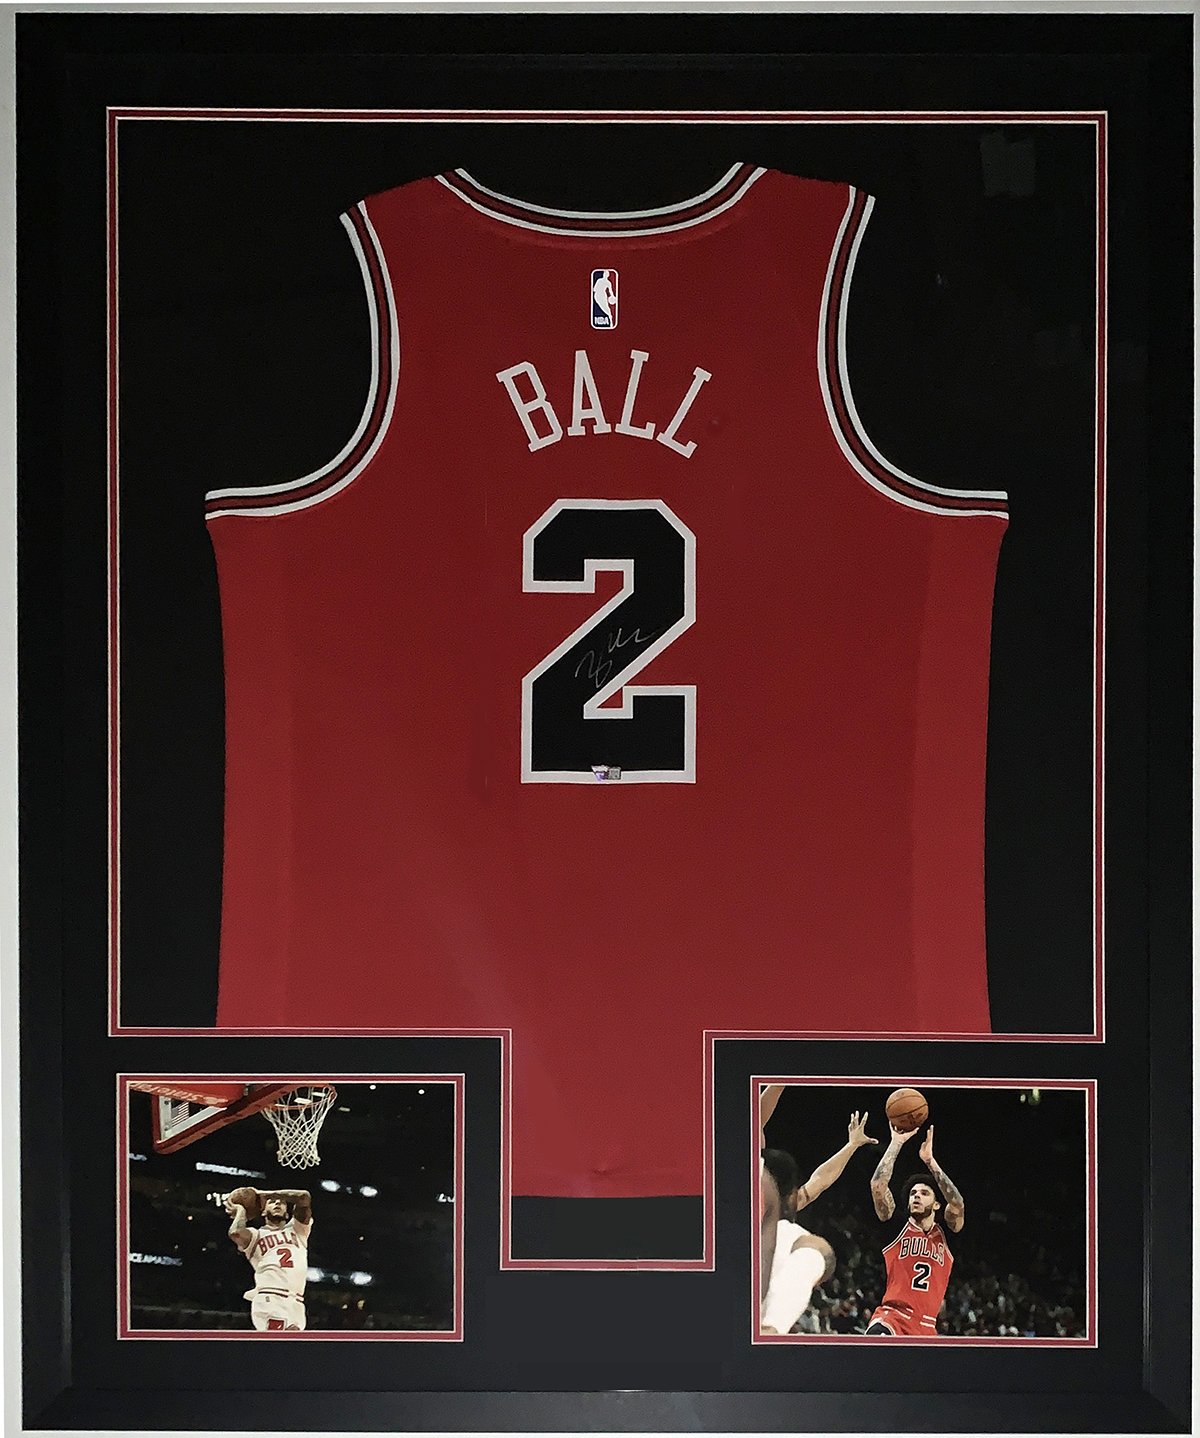 Lonzo Ball Chicago Bulls Fanatics Authentic Autographed Nike